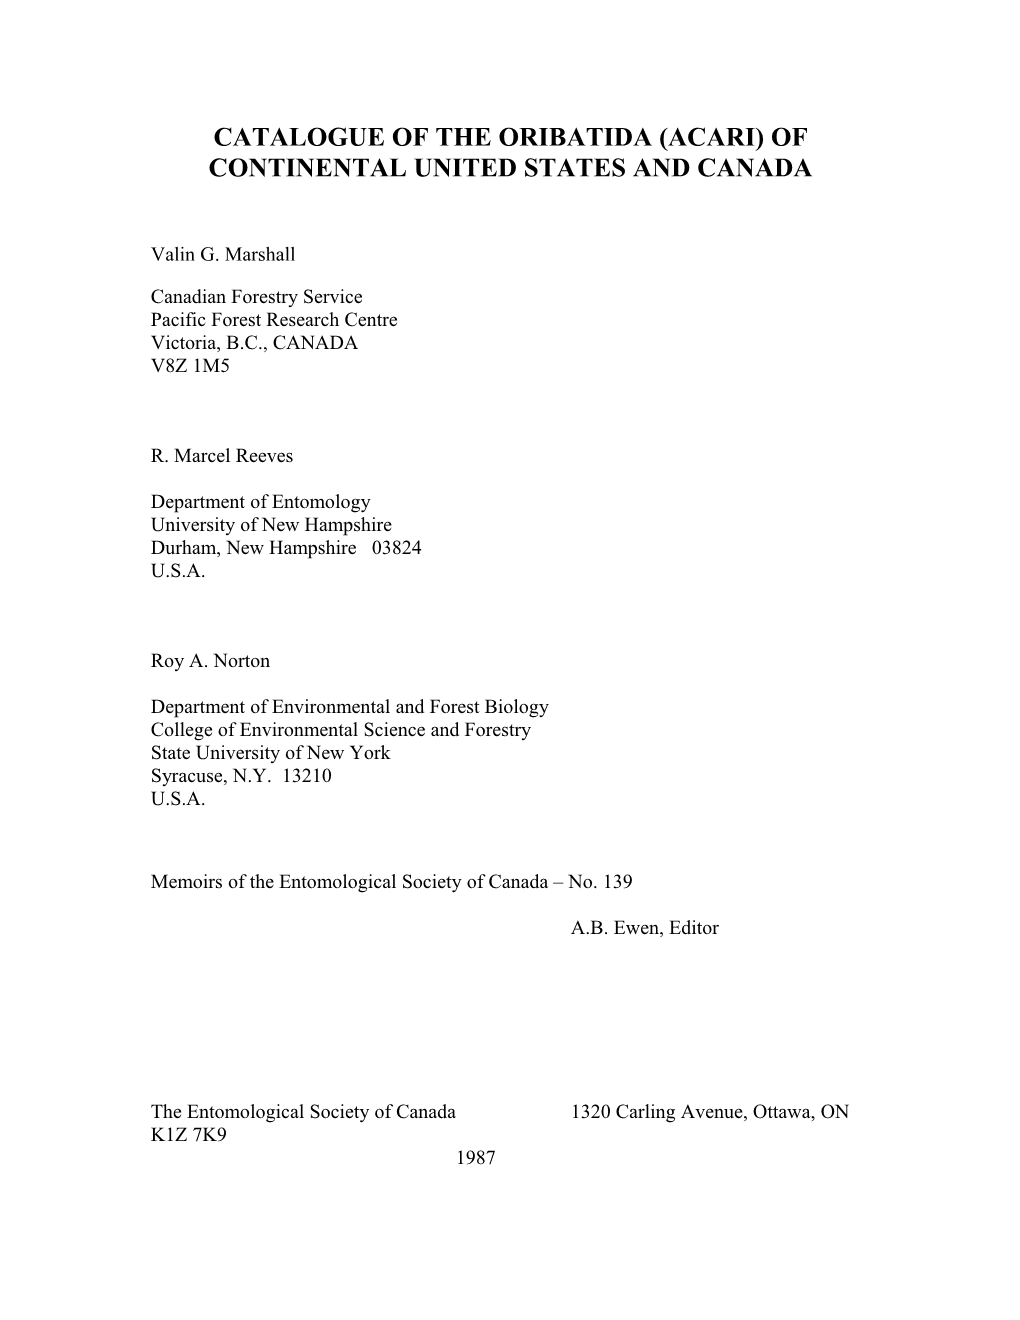 Catalogue of the Oribatida (Acari) of Continental United States and Canada